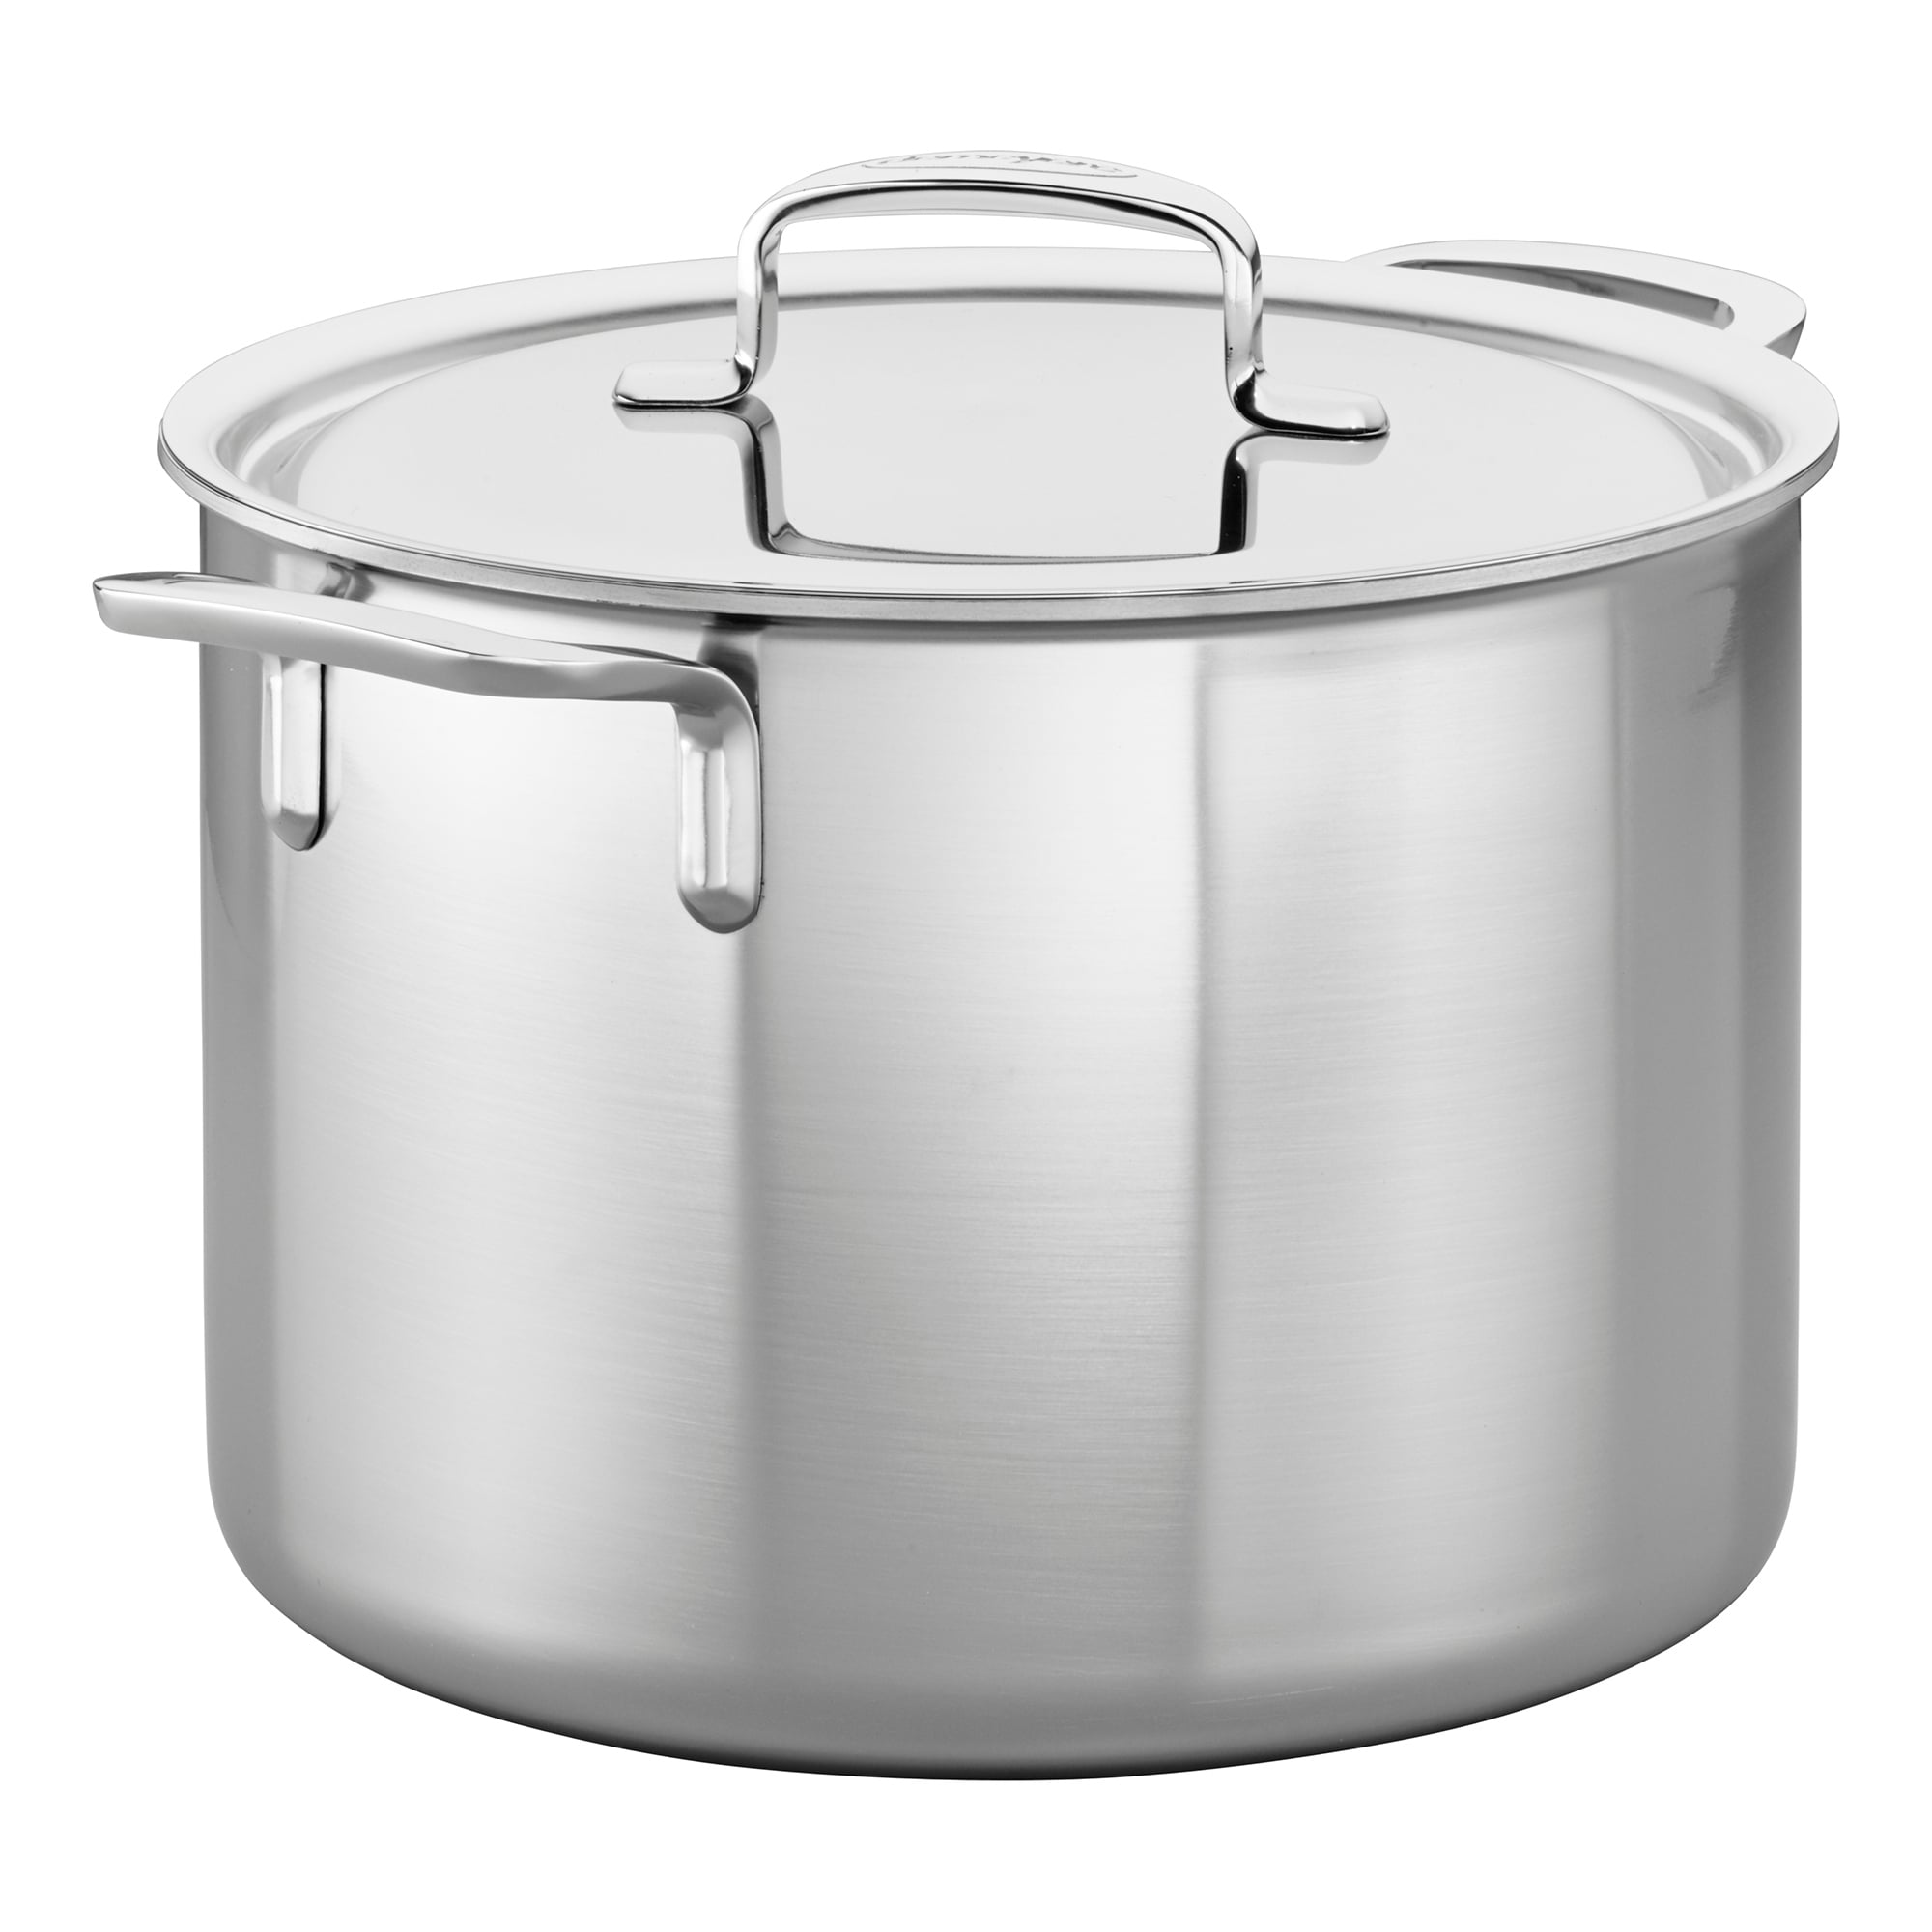 Demeyere 5-Plus 8-Quart Stainless Steel Stock Pot 18394